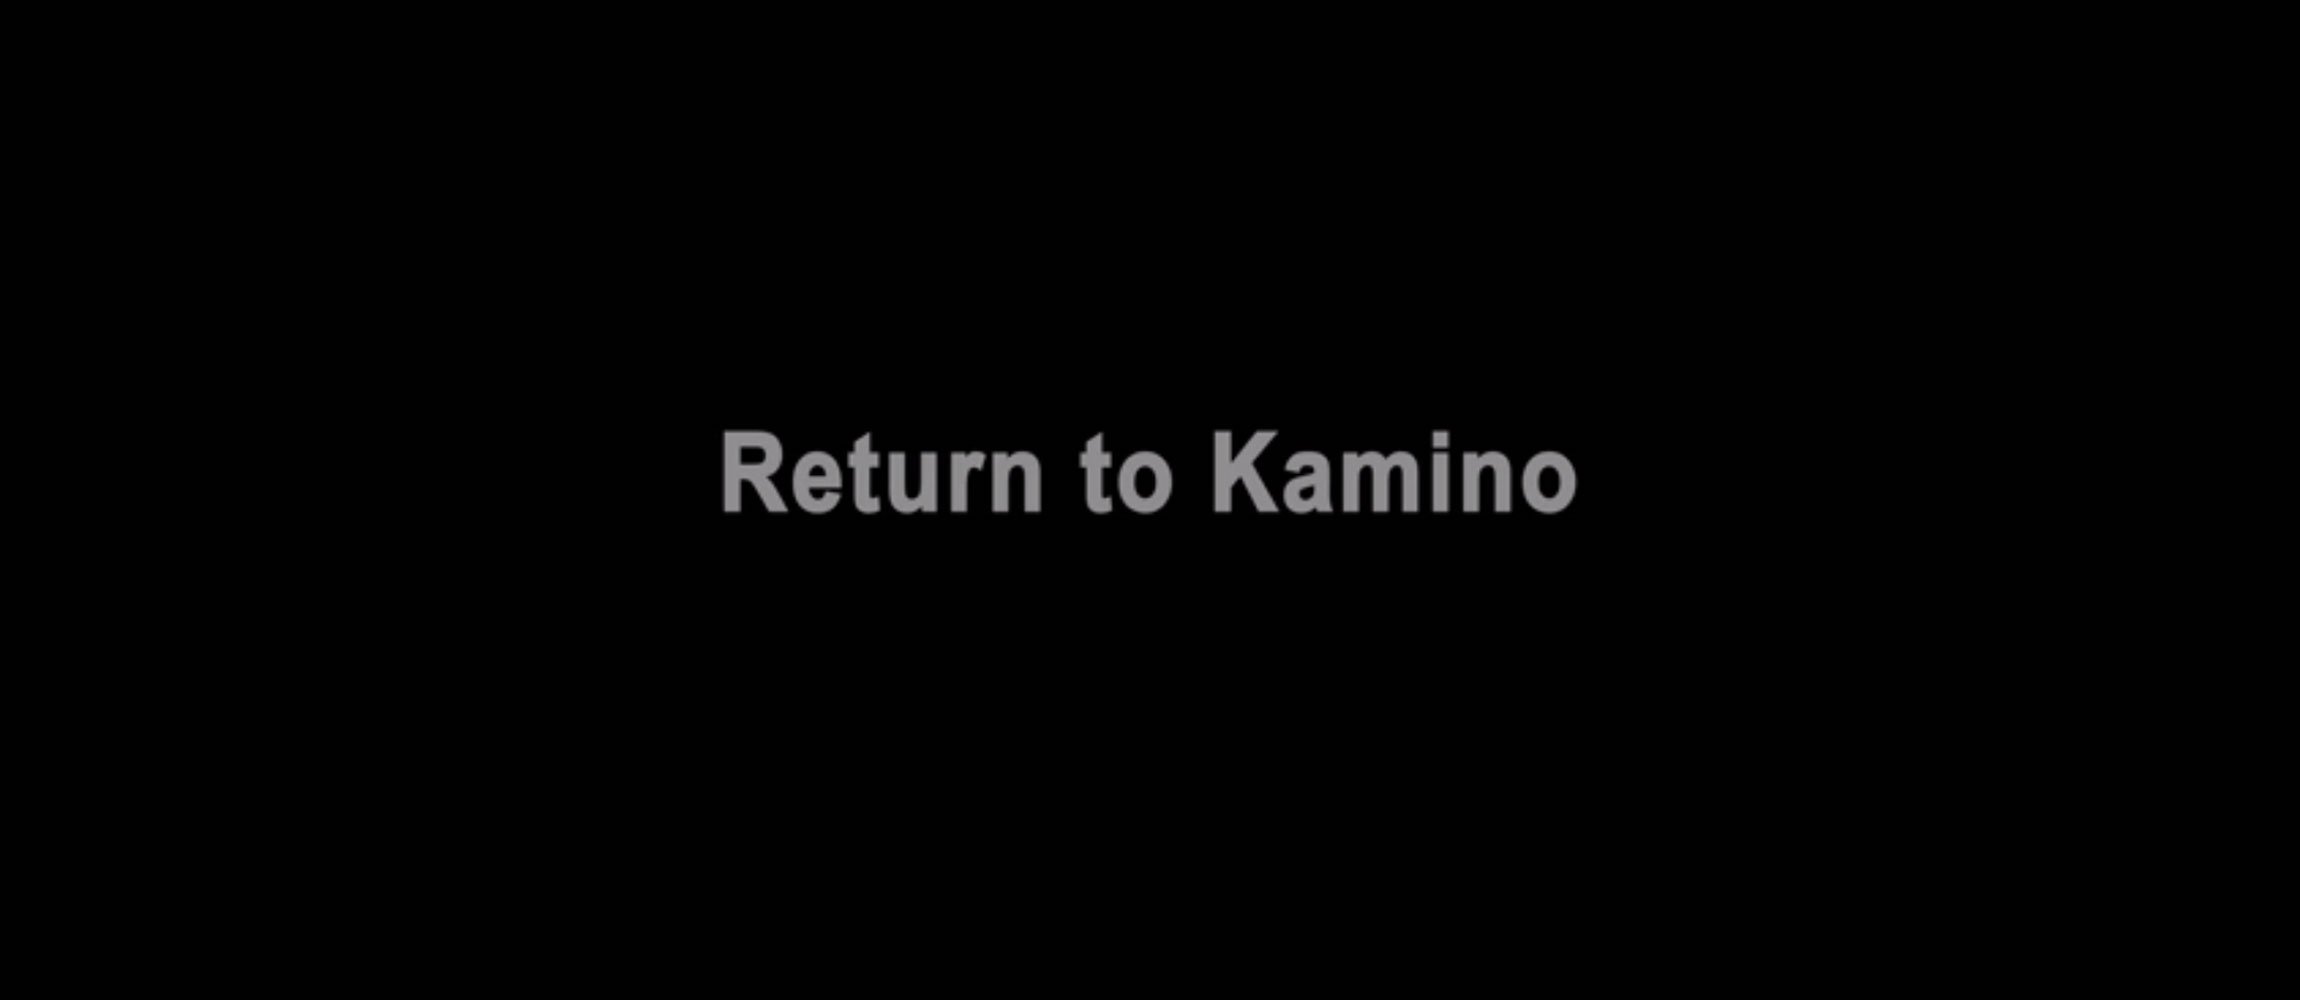 Return to Kamino title card